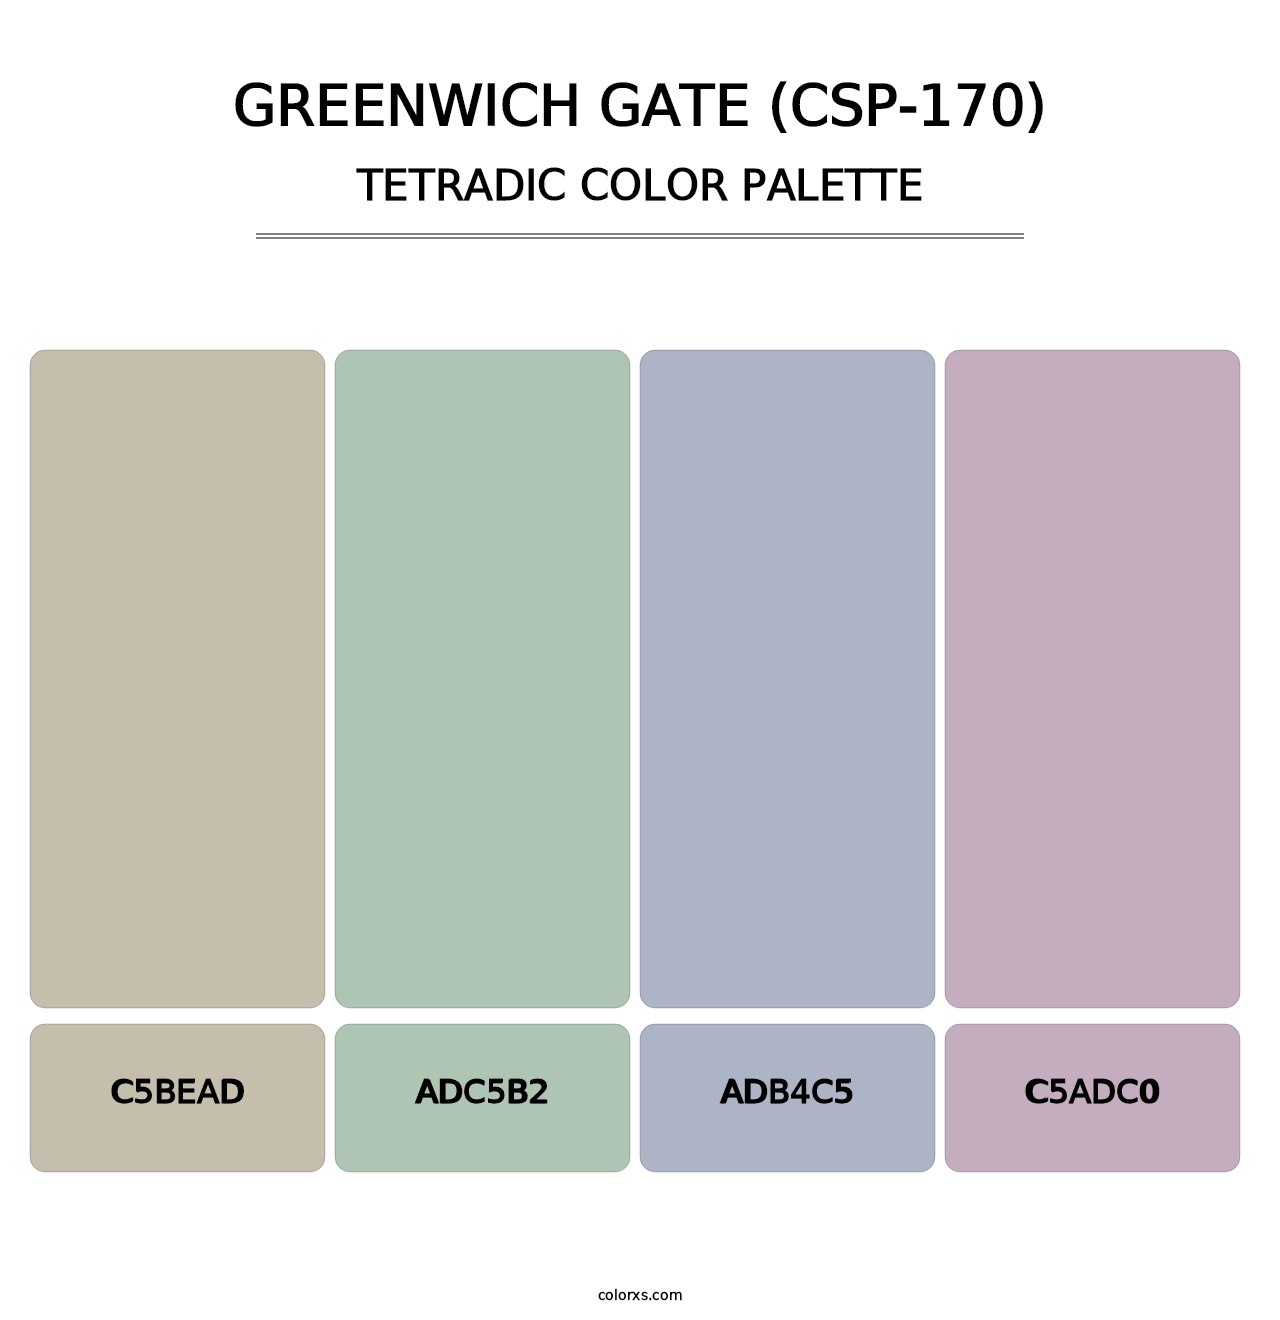 Greenwich Gate (CSP-170) - Tetradic Color Palette